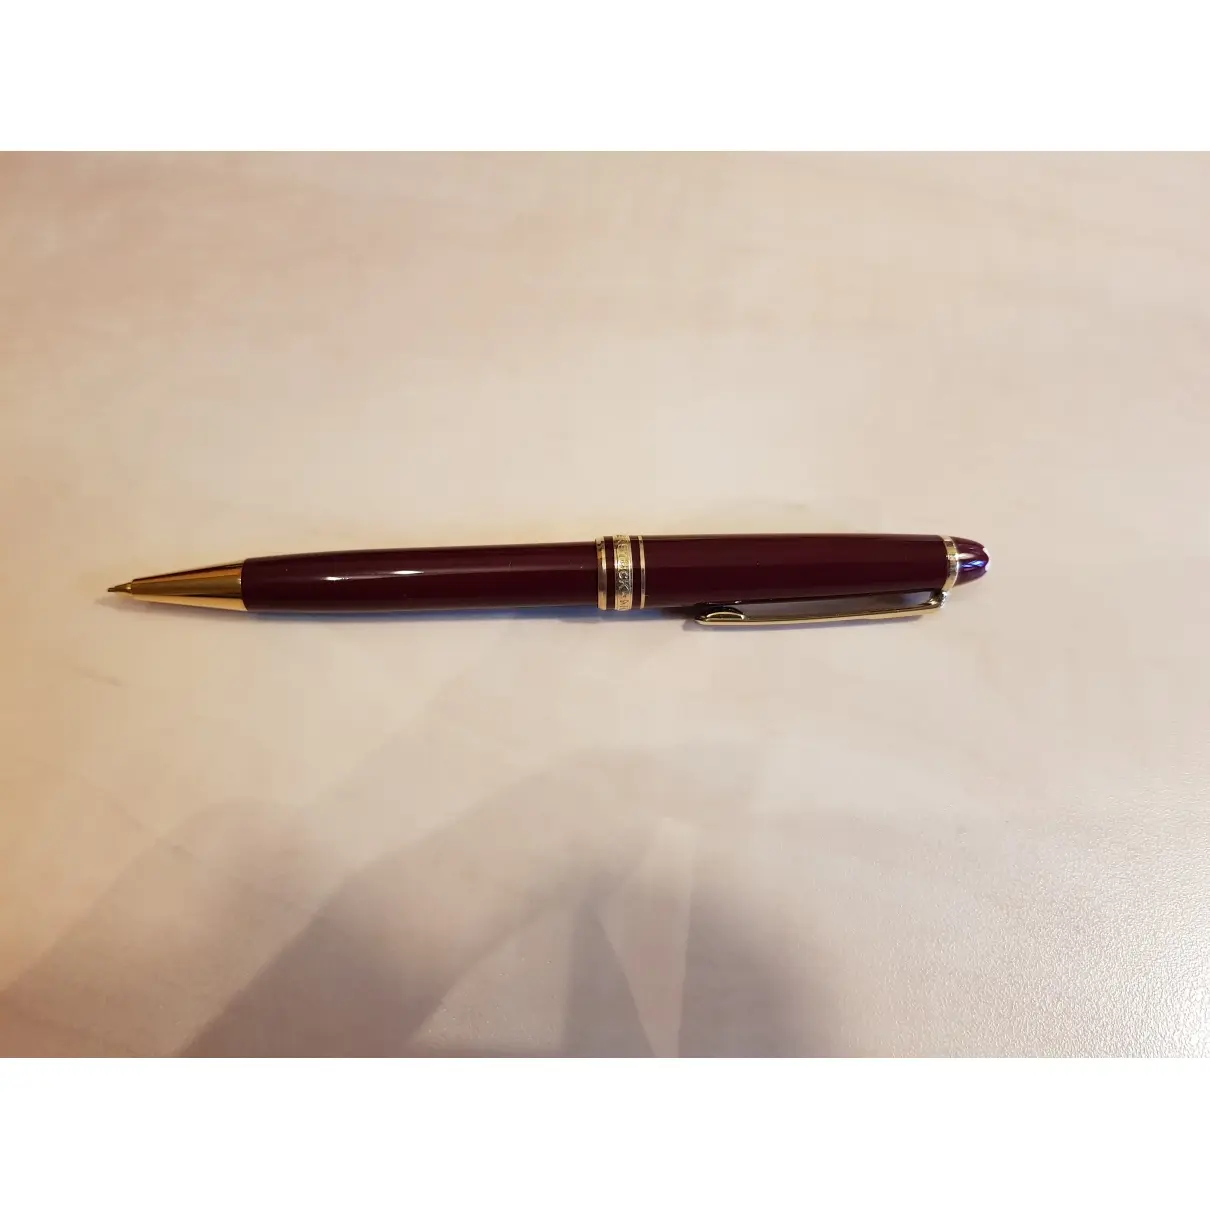 Montblanc Meisterstück pen for sale - Vintage